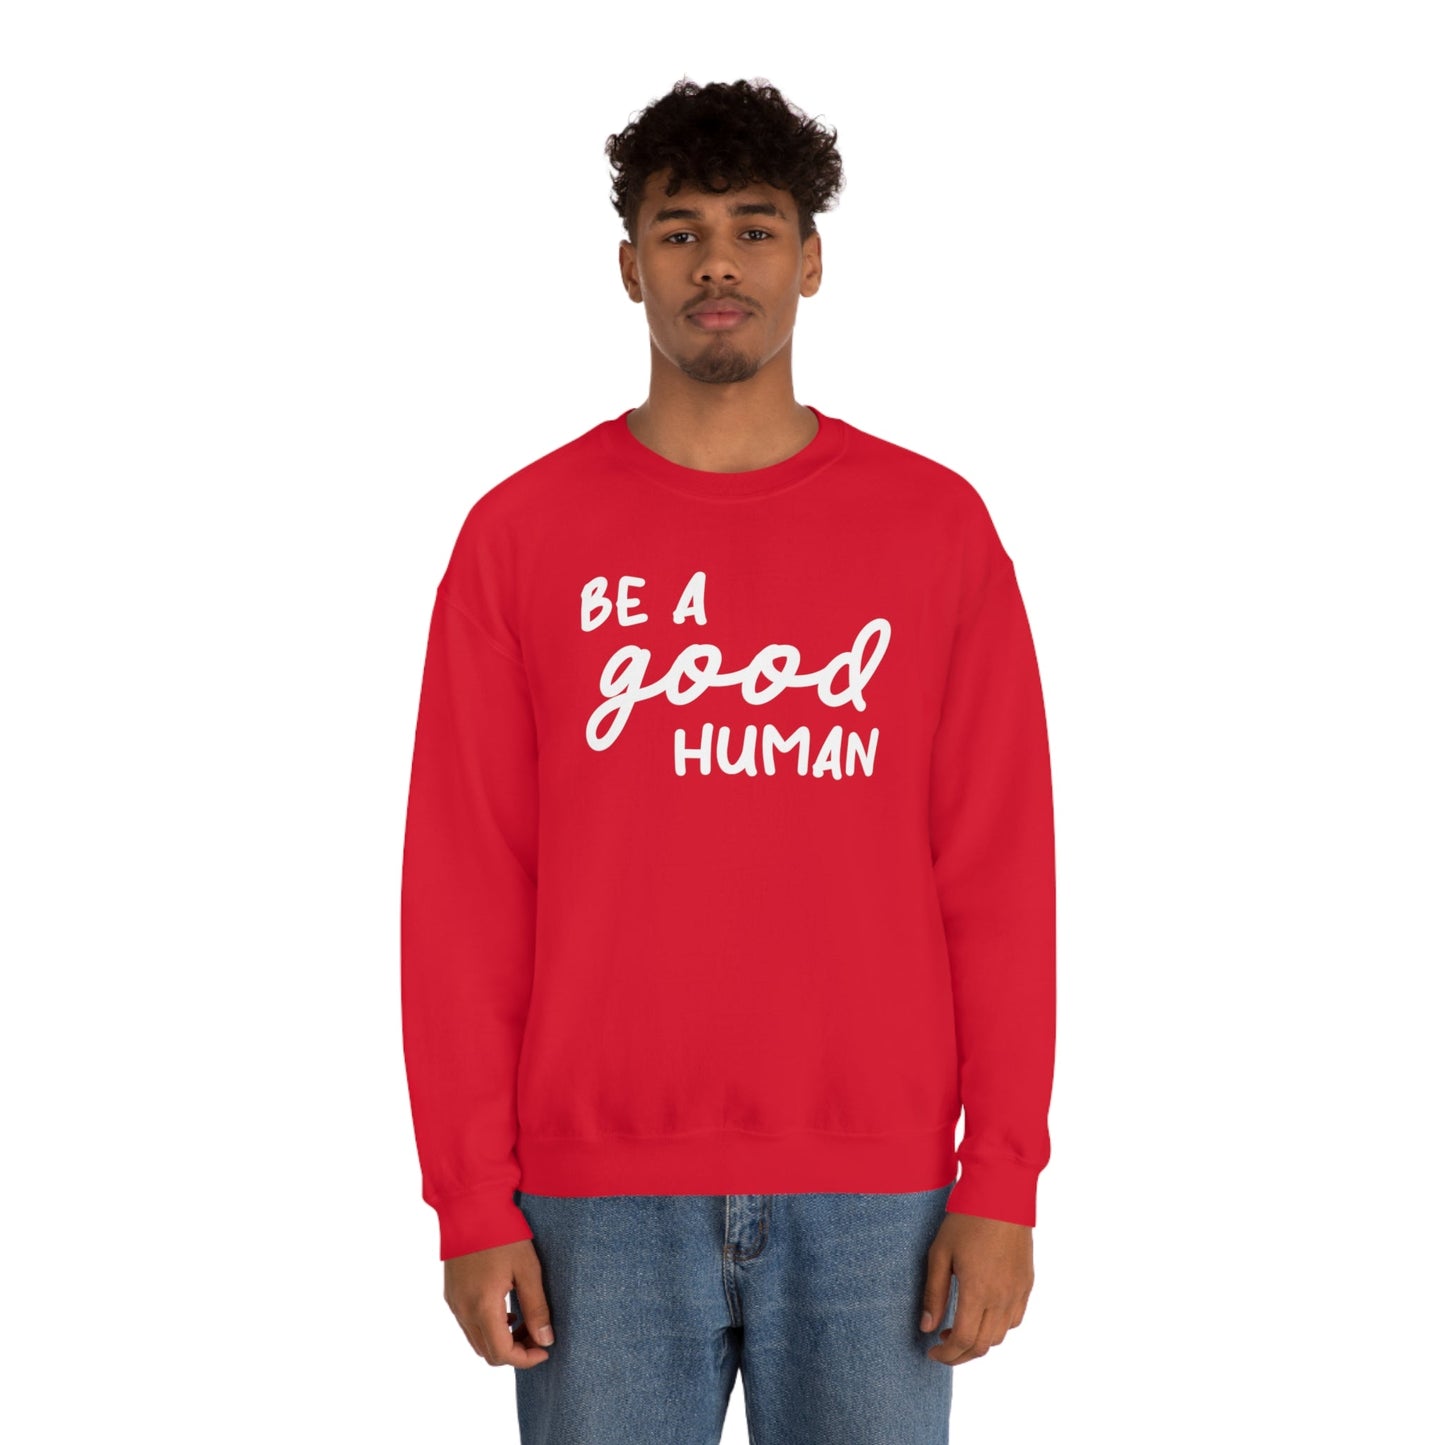 Be A Good Human | Crewneck Sweatshirt - Detezi Designs-10771312644115252589